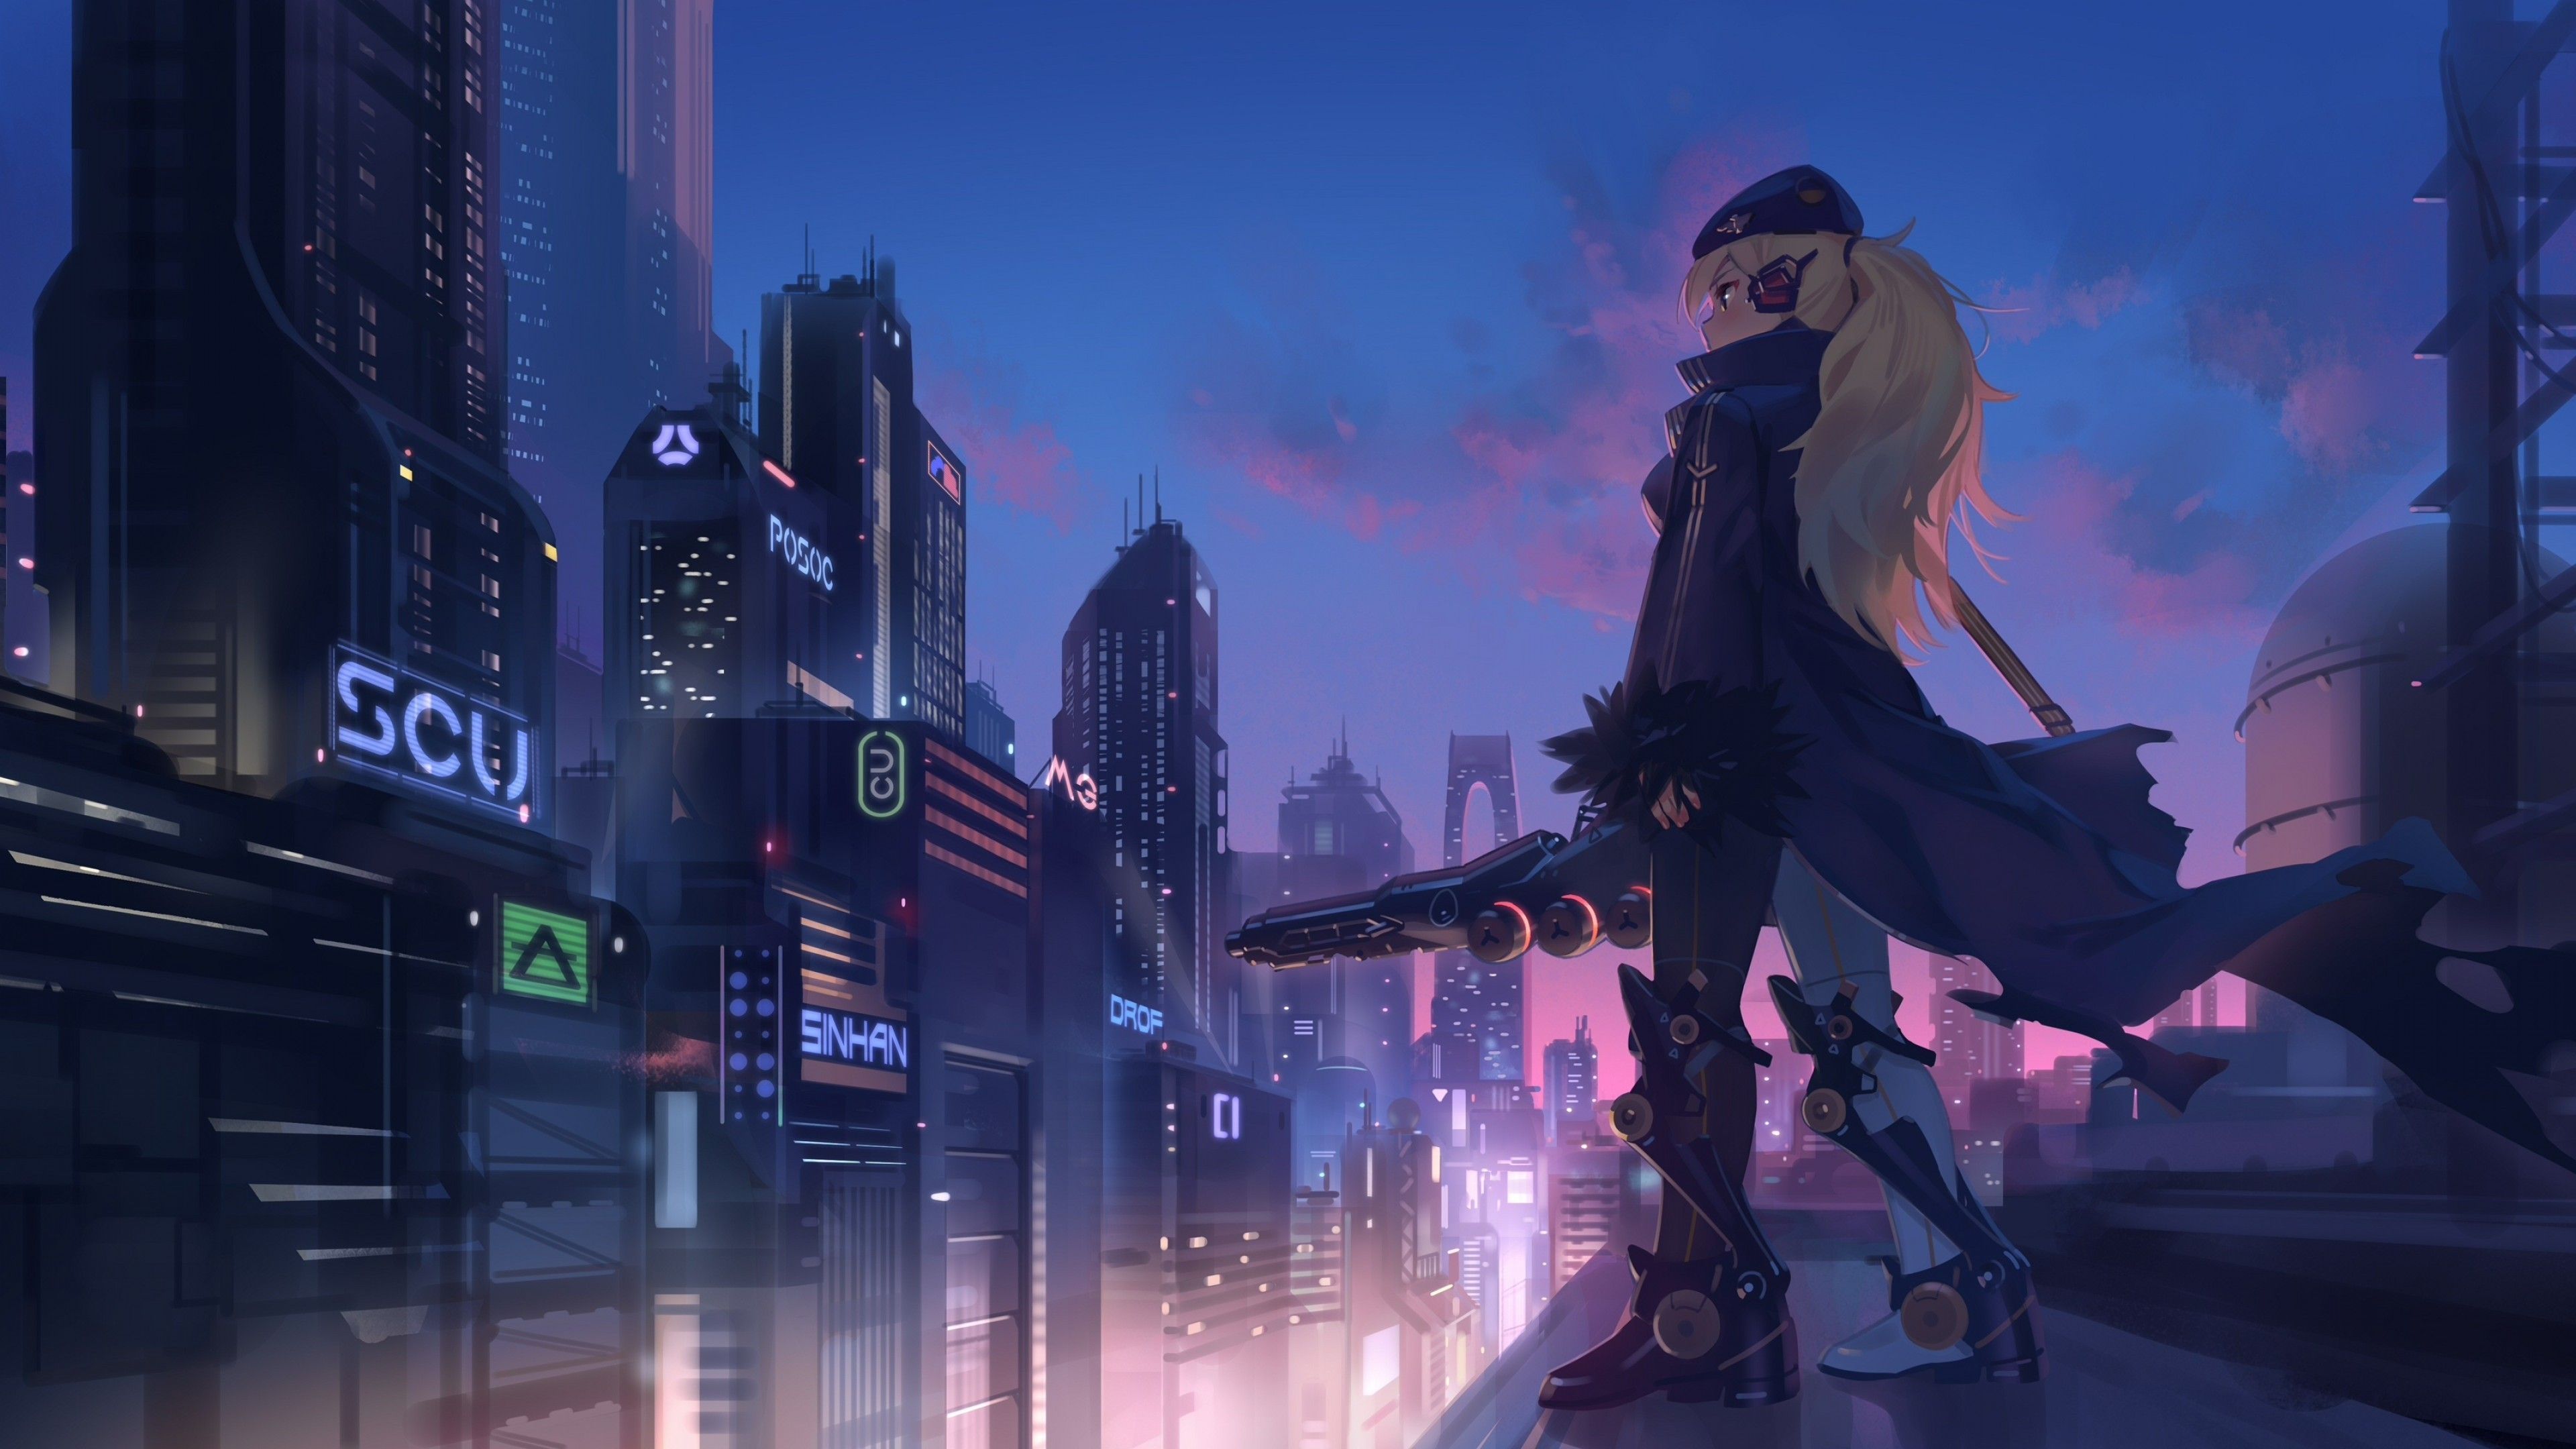 Download 3840x2160 Futuristic Anime City, Cyberpunk, Anime Girl, Skyscrapers Wallpaper for UHD TV